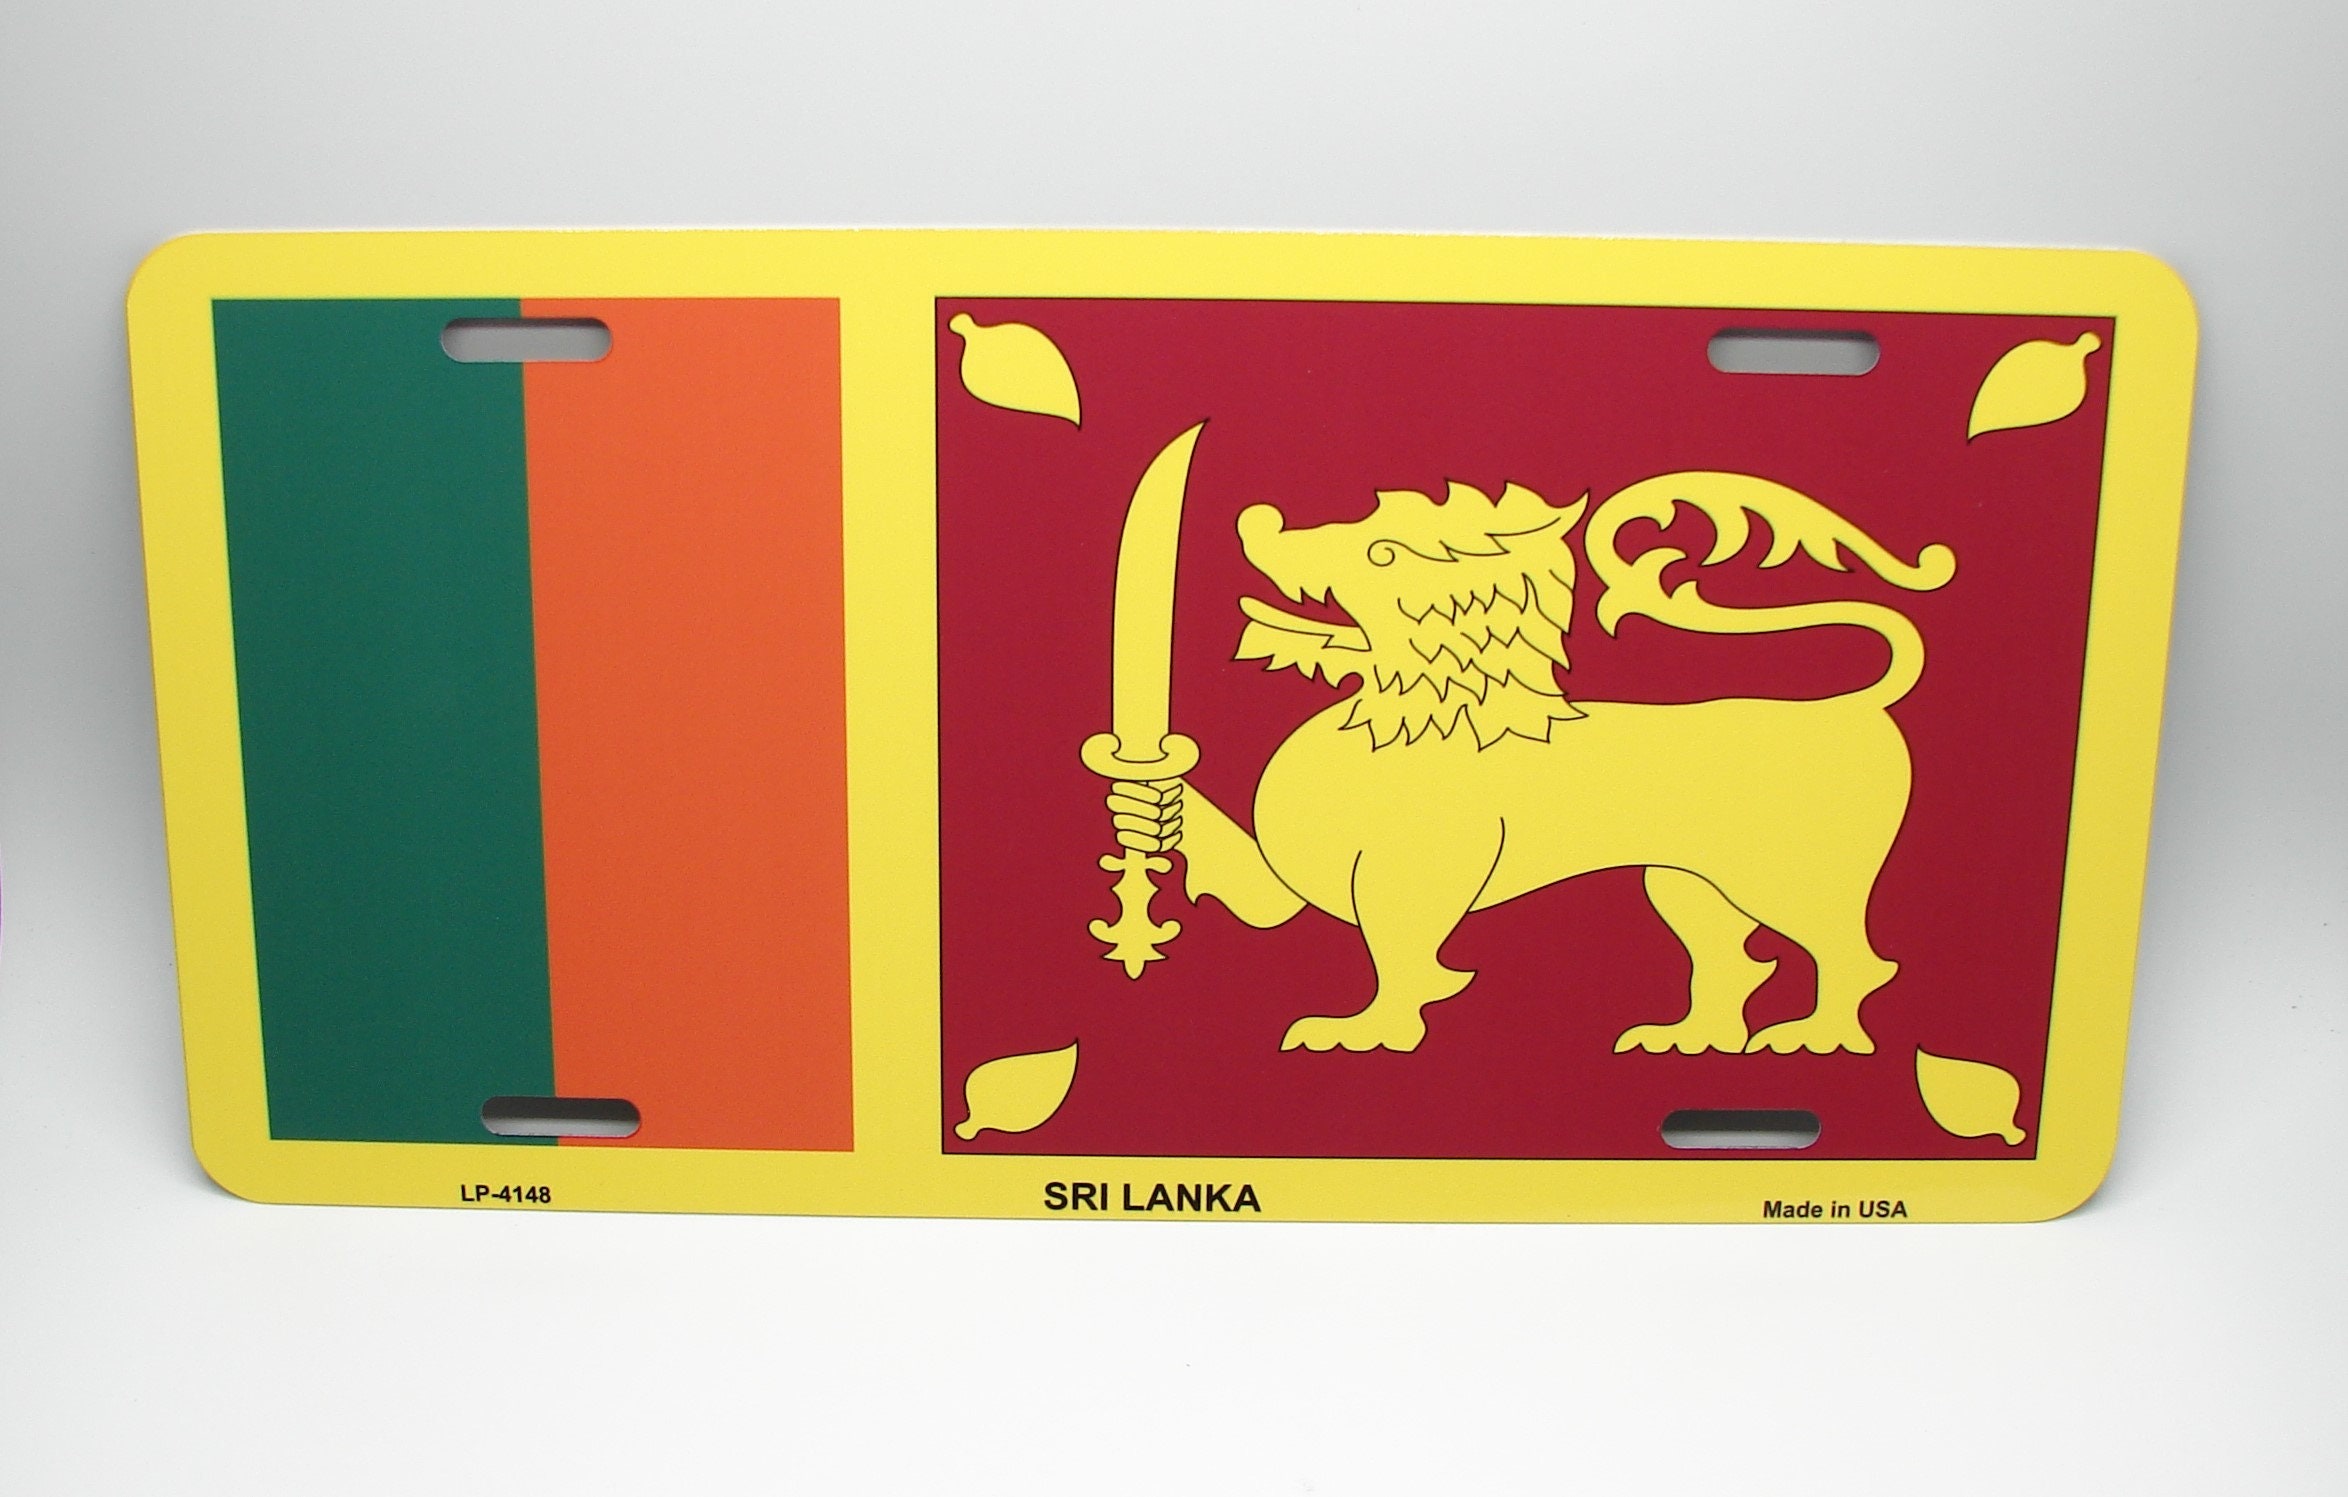 SRI LANKA FLAG Metal Car Novelty License Plate Auto Tag. Sri Lankan Flag  Car License Plate 